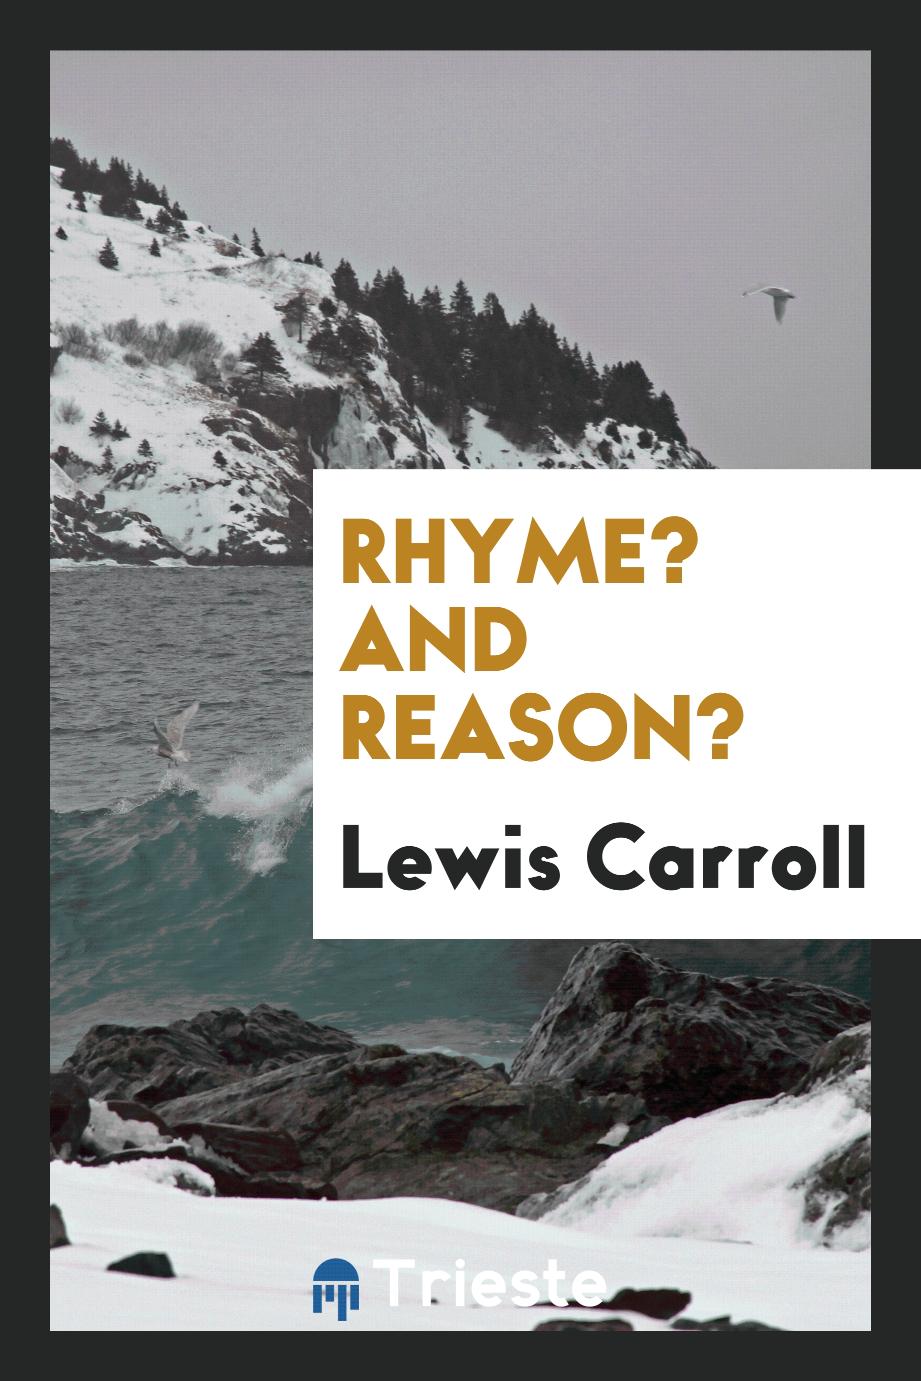 Rhyme? and reason?